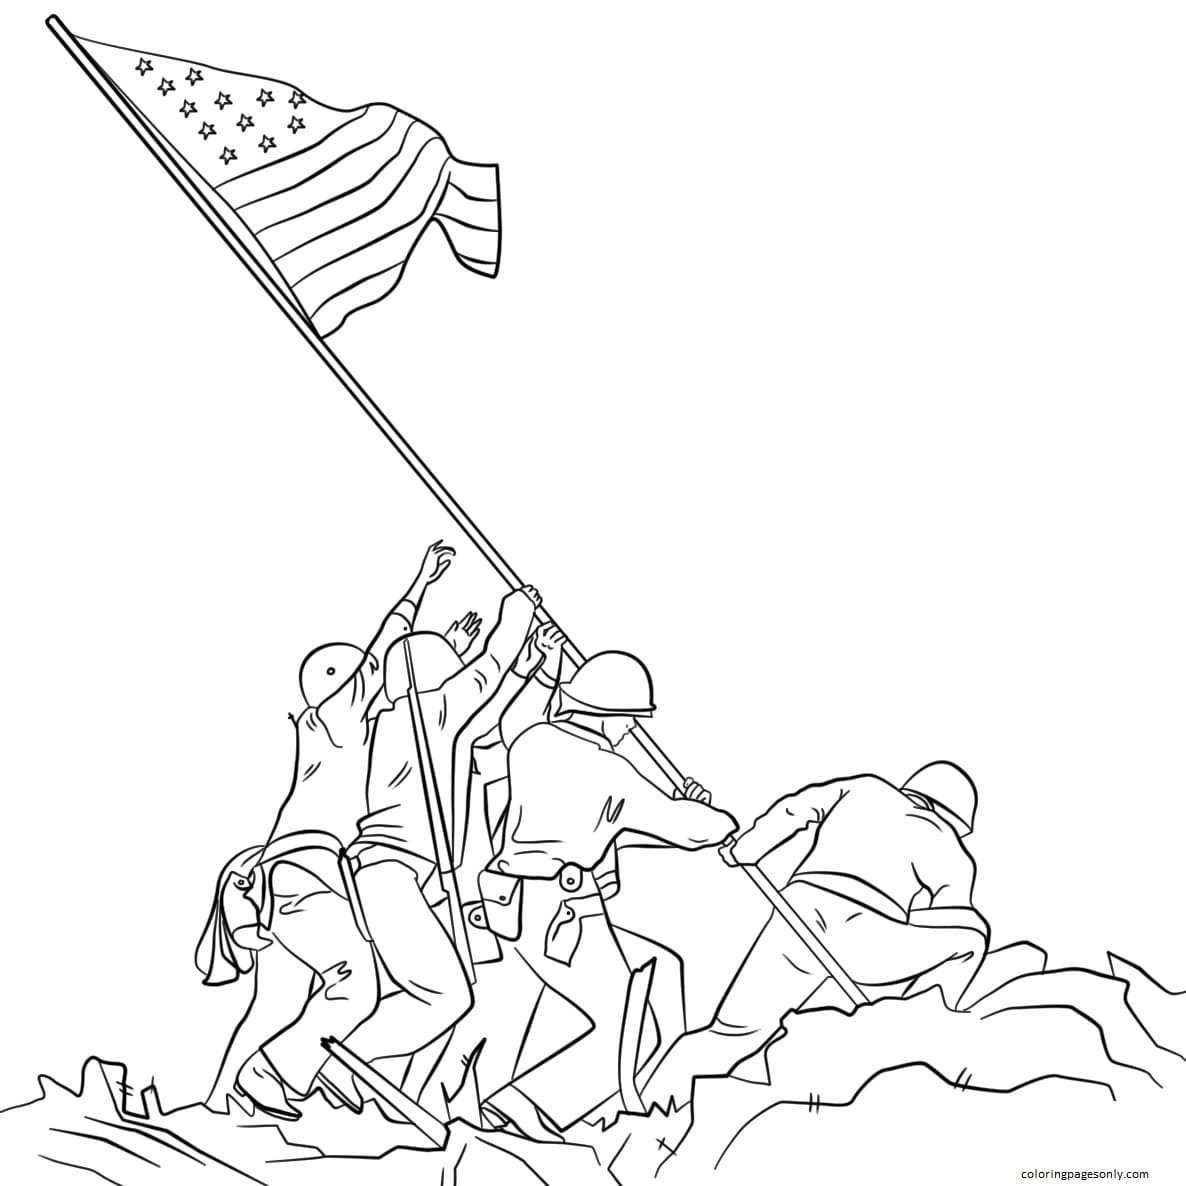 Raising The Flag on iwo jima Coloring Page